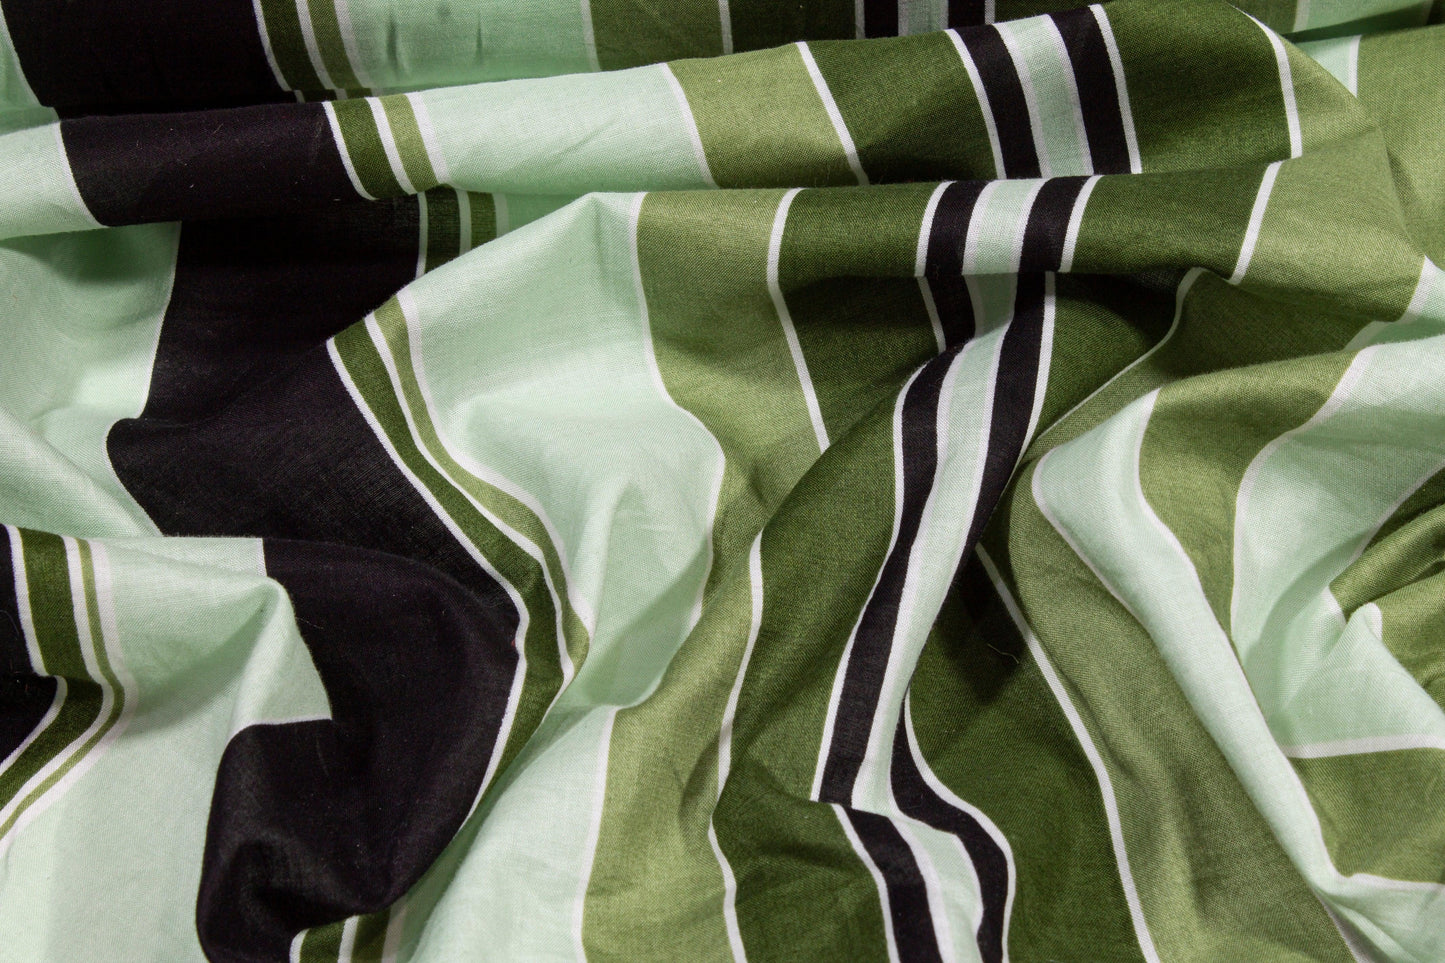 Striped Cotton Voile - Green and Black - Prime Fabrics